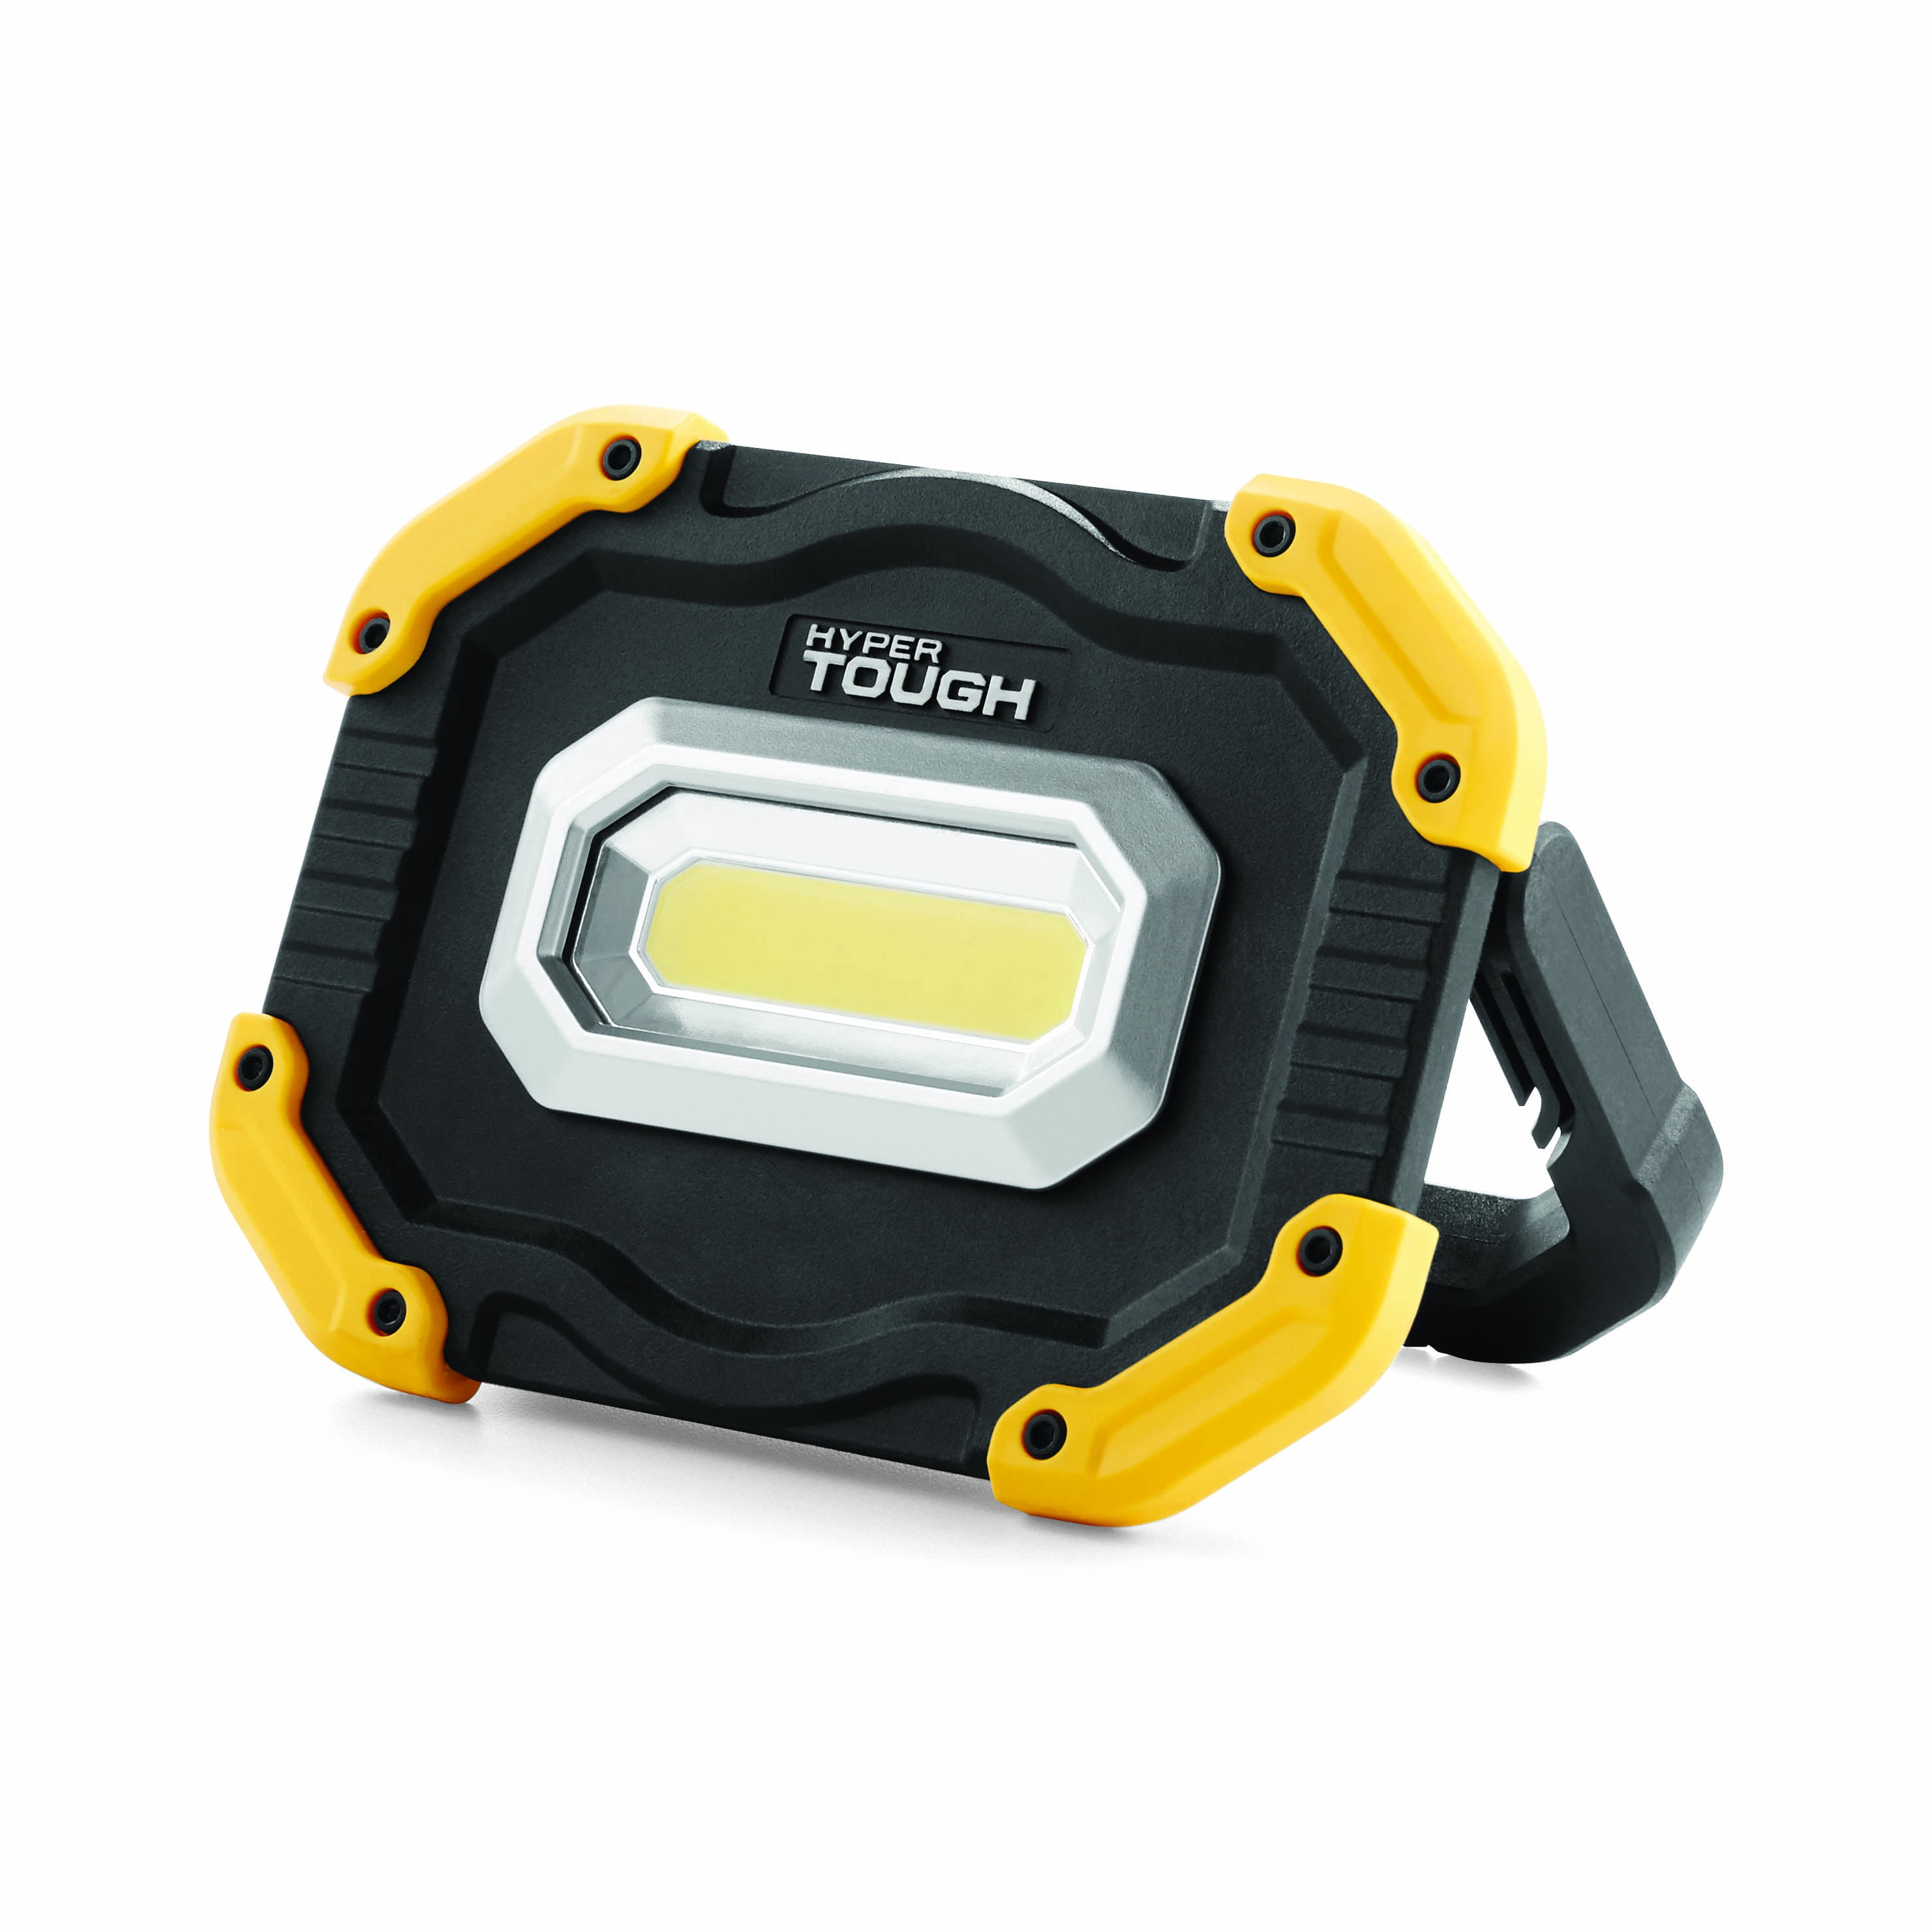 Hyper Tough 1000 Lumen LED Rechargeable Work Light, Yellow and Black, Model  9978